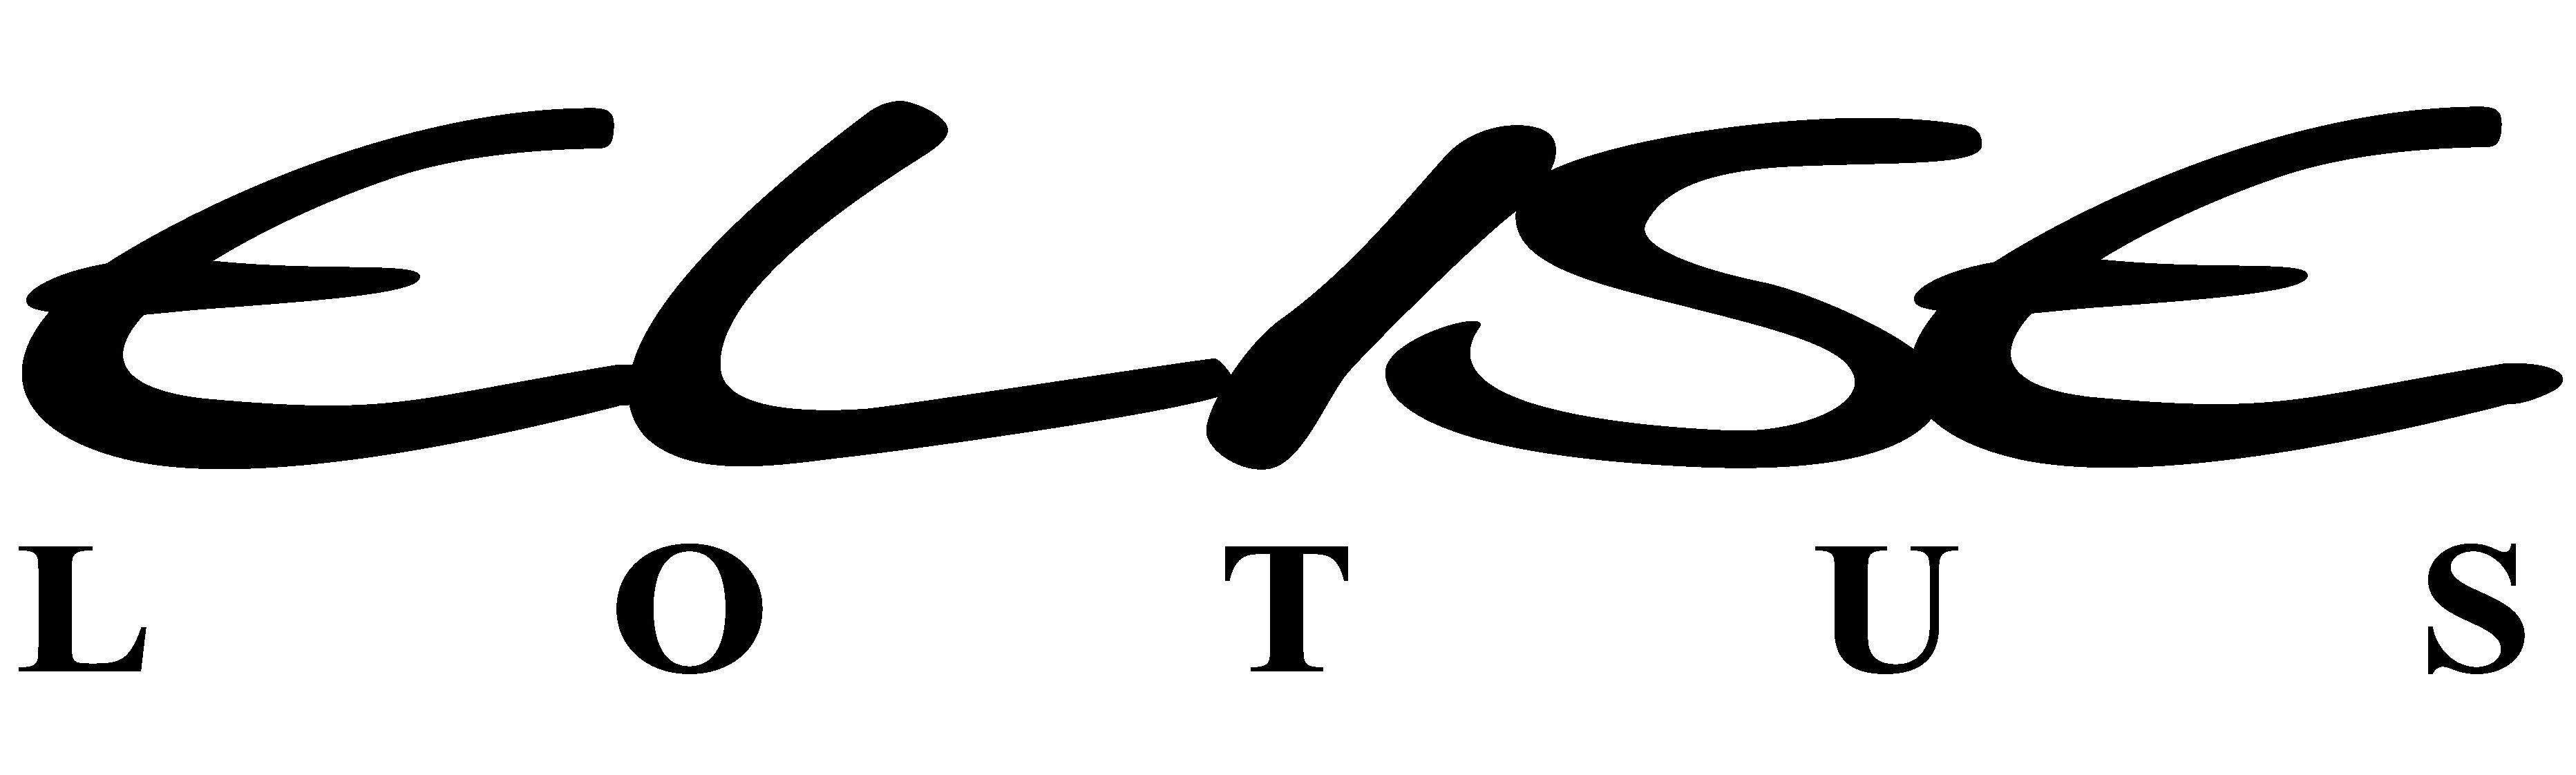 Lotus Car Logo - Lotus related emblems | Cartype